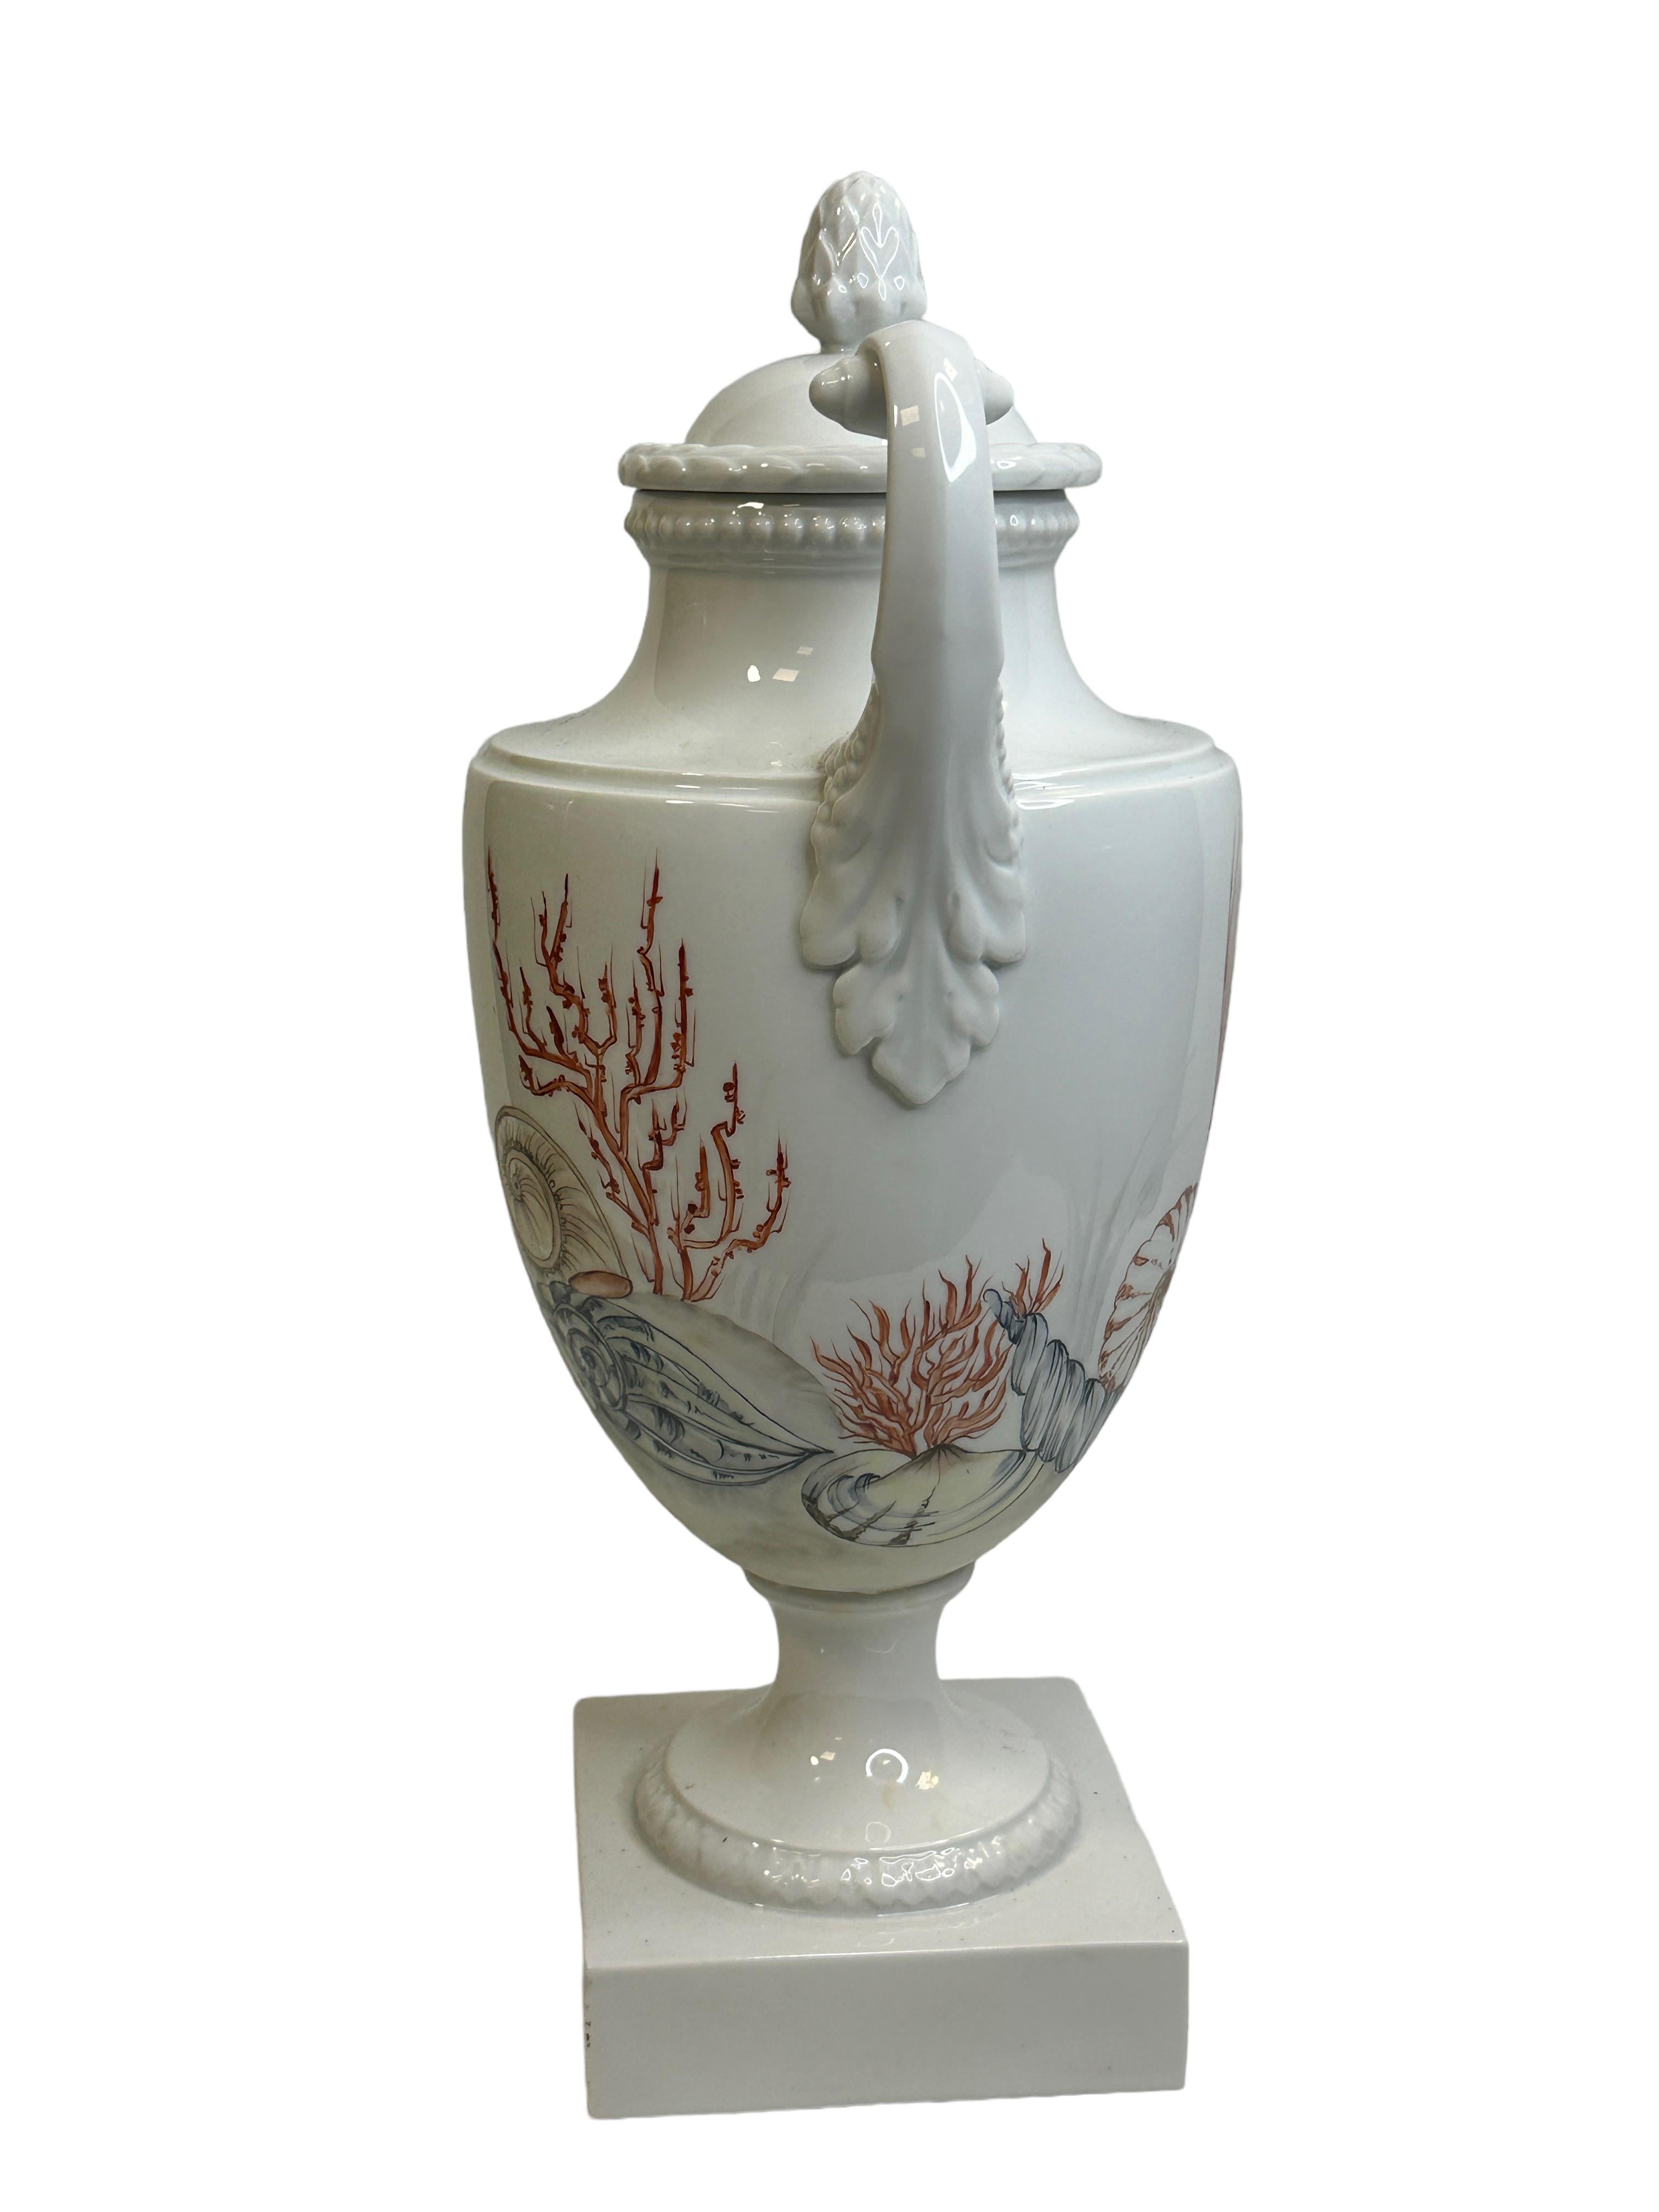 20th Century Amphora lidded Vase with Sea Creatures Motif by Lindner Porcelain vintage 1960s For Sale